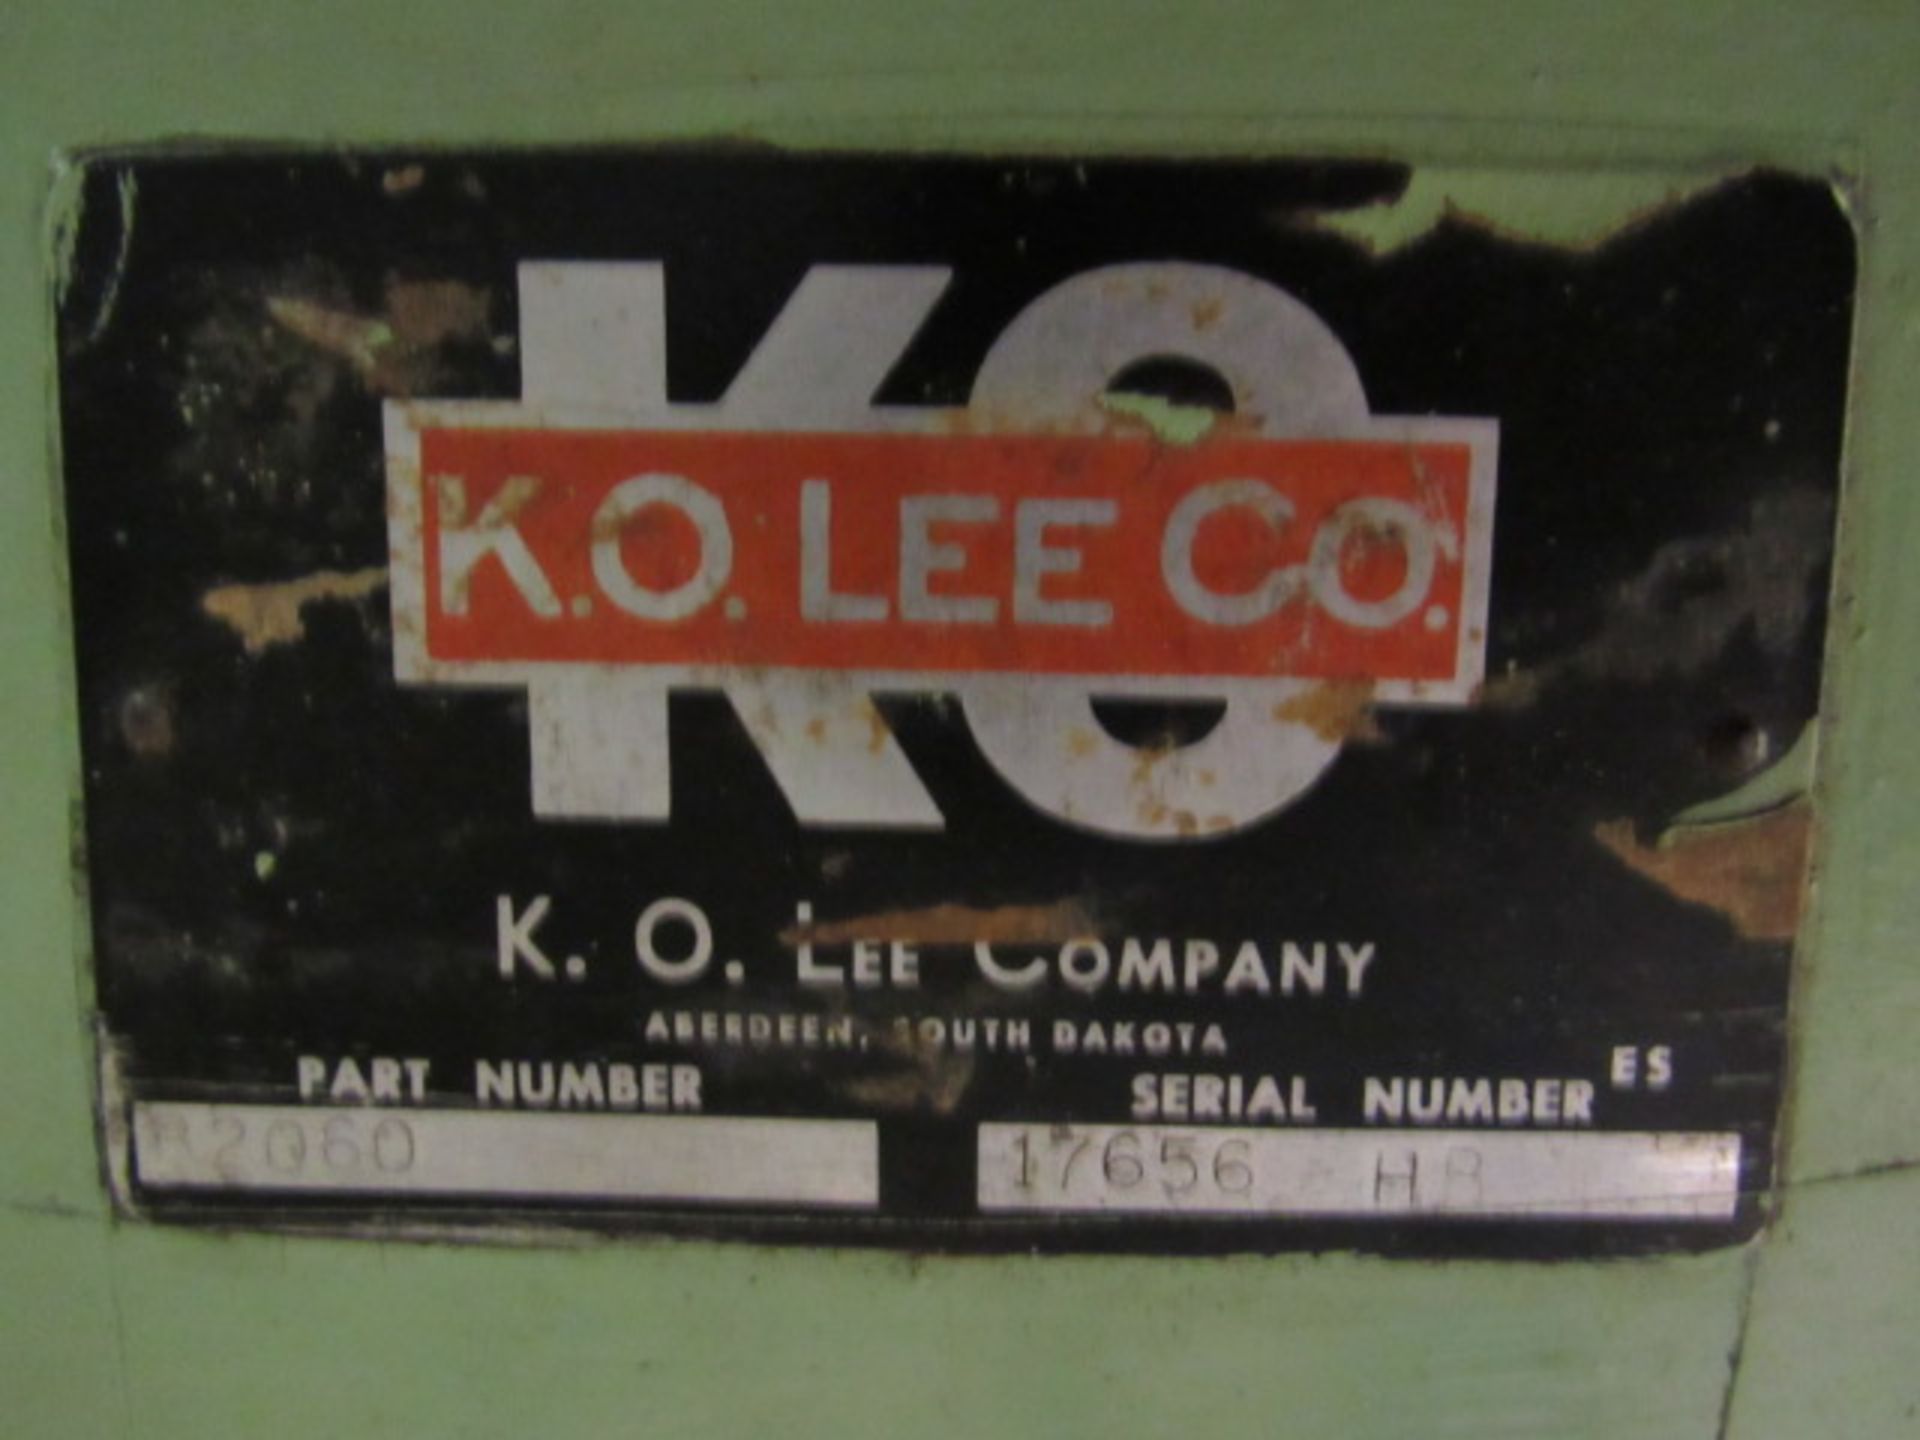 K.O. Lee Model B2060 Tool and Cutter Grinder - Image 5 of 5